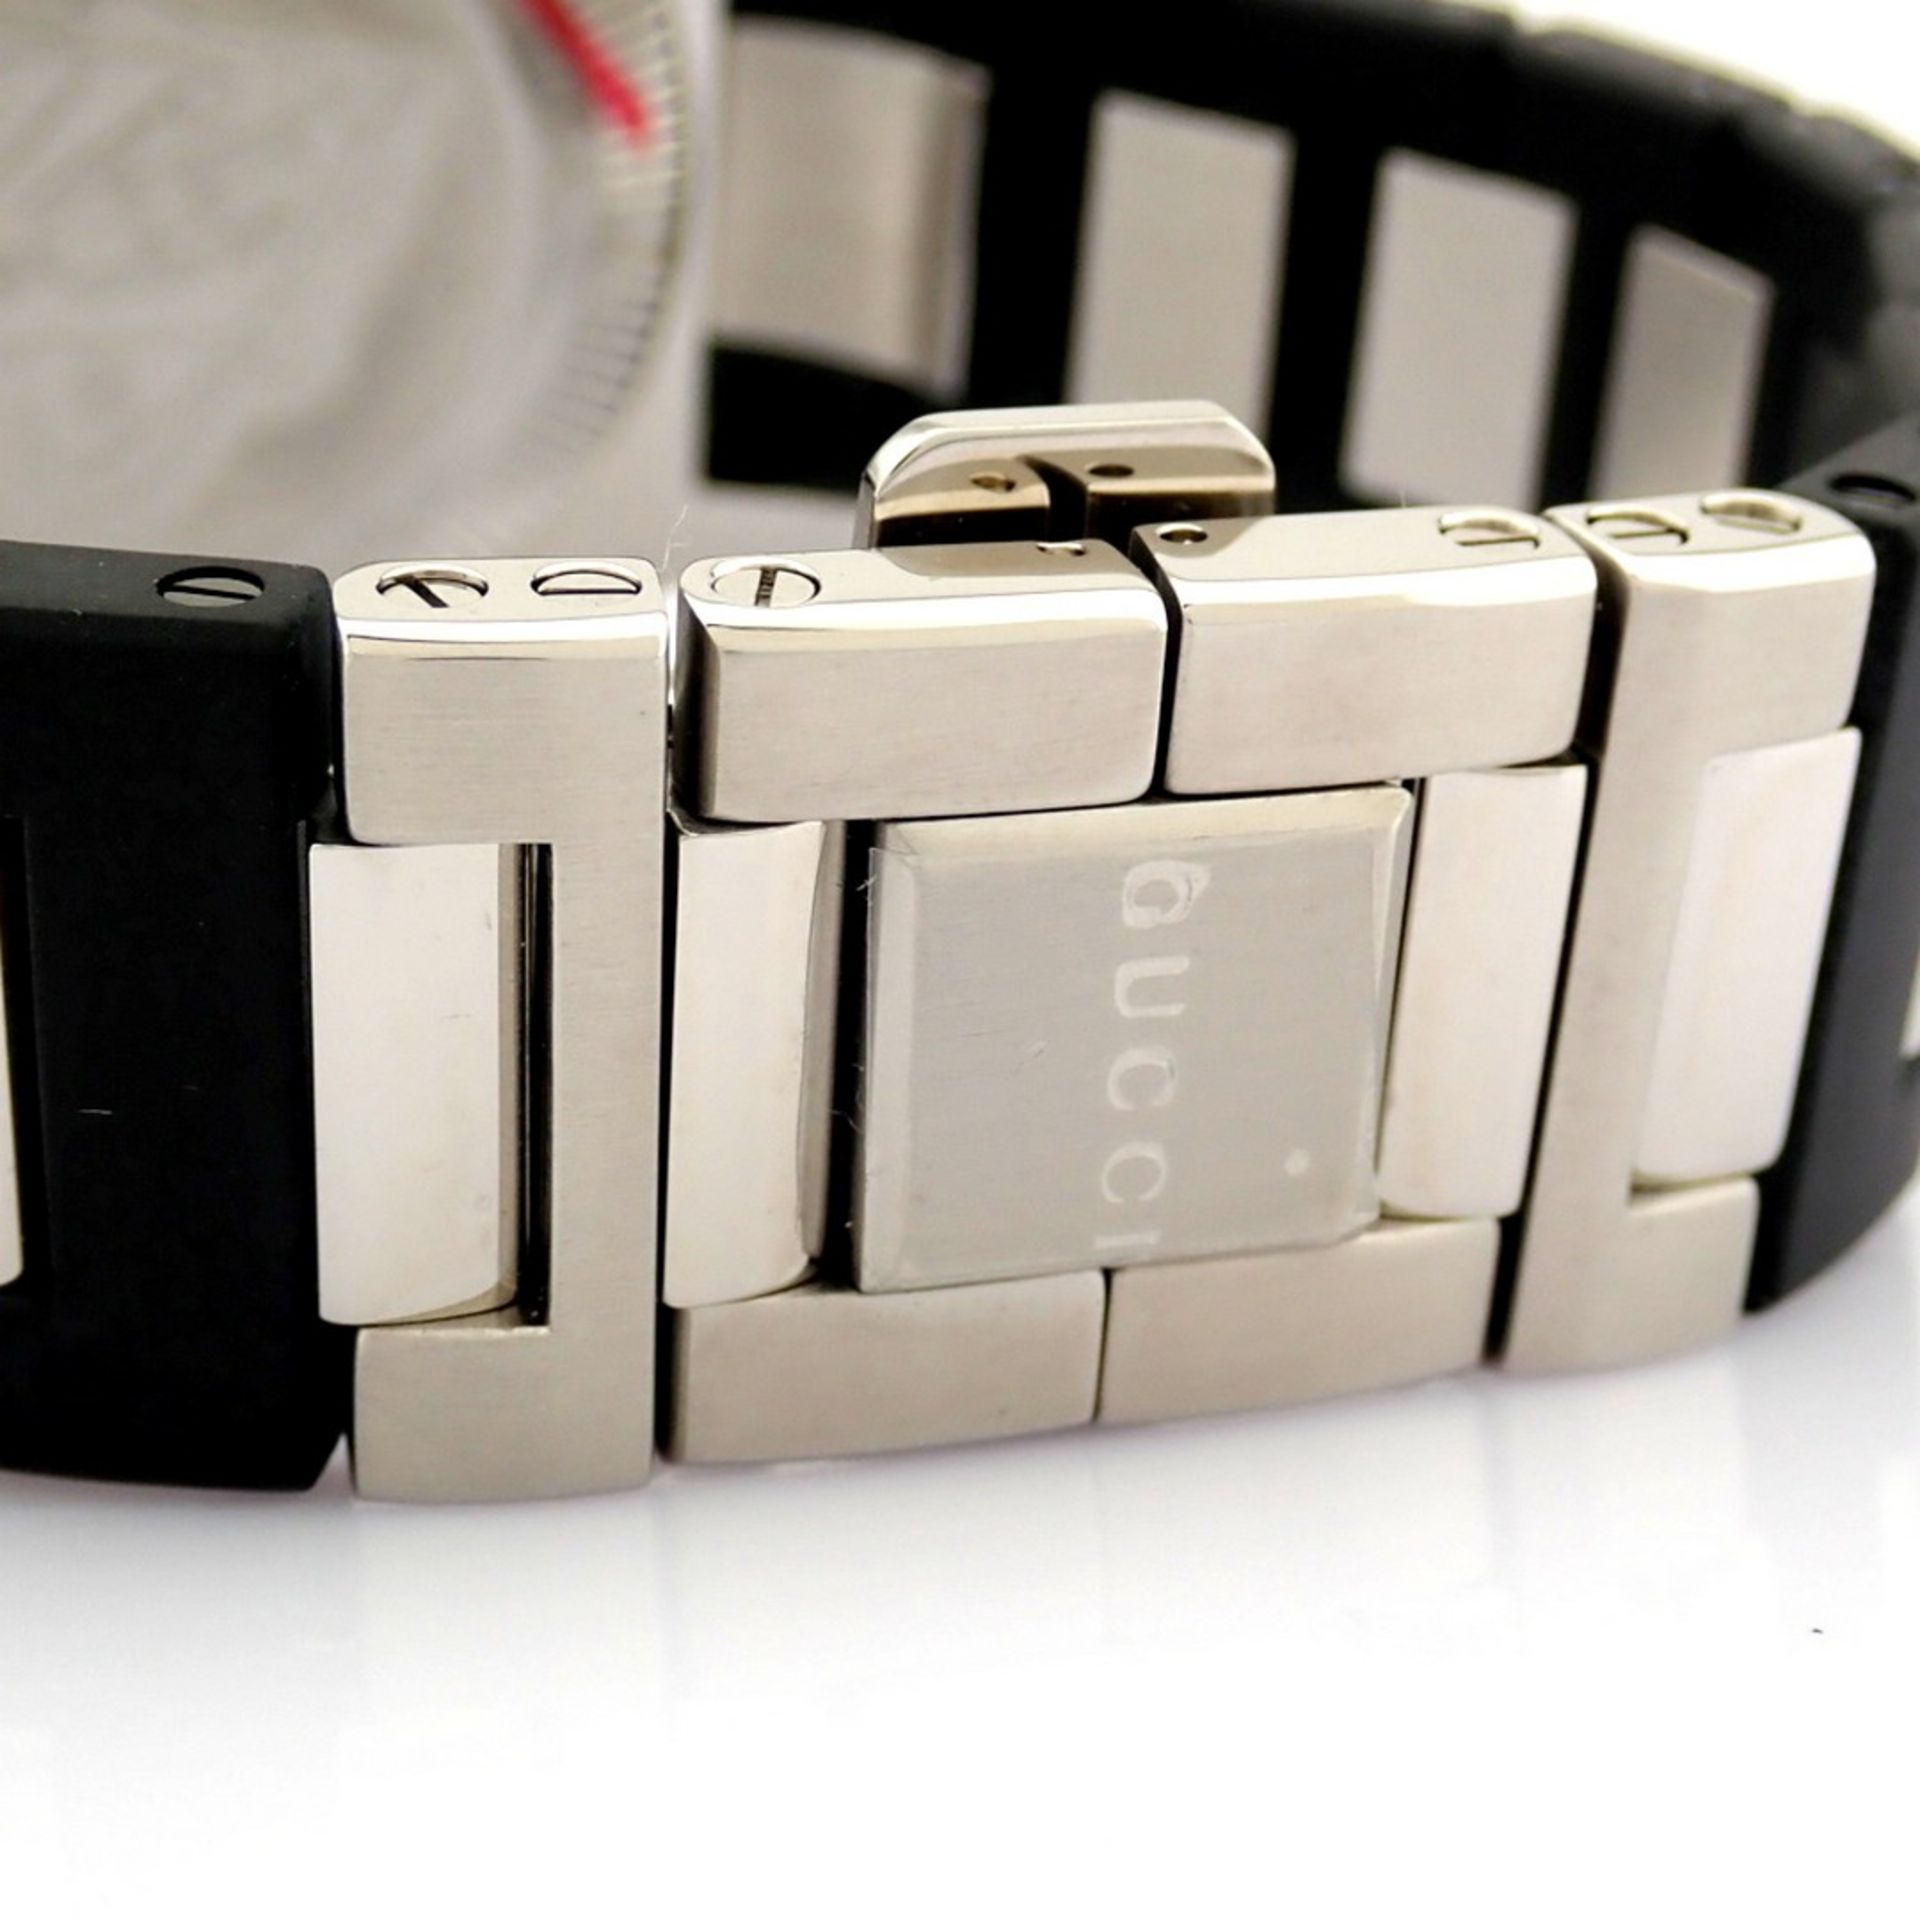 Gucci / Pantheon 115.2 (Brand New) - Gentlmen's Steel Wrist Watch - Image 11 of 13